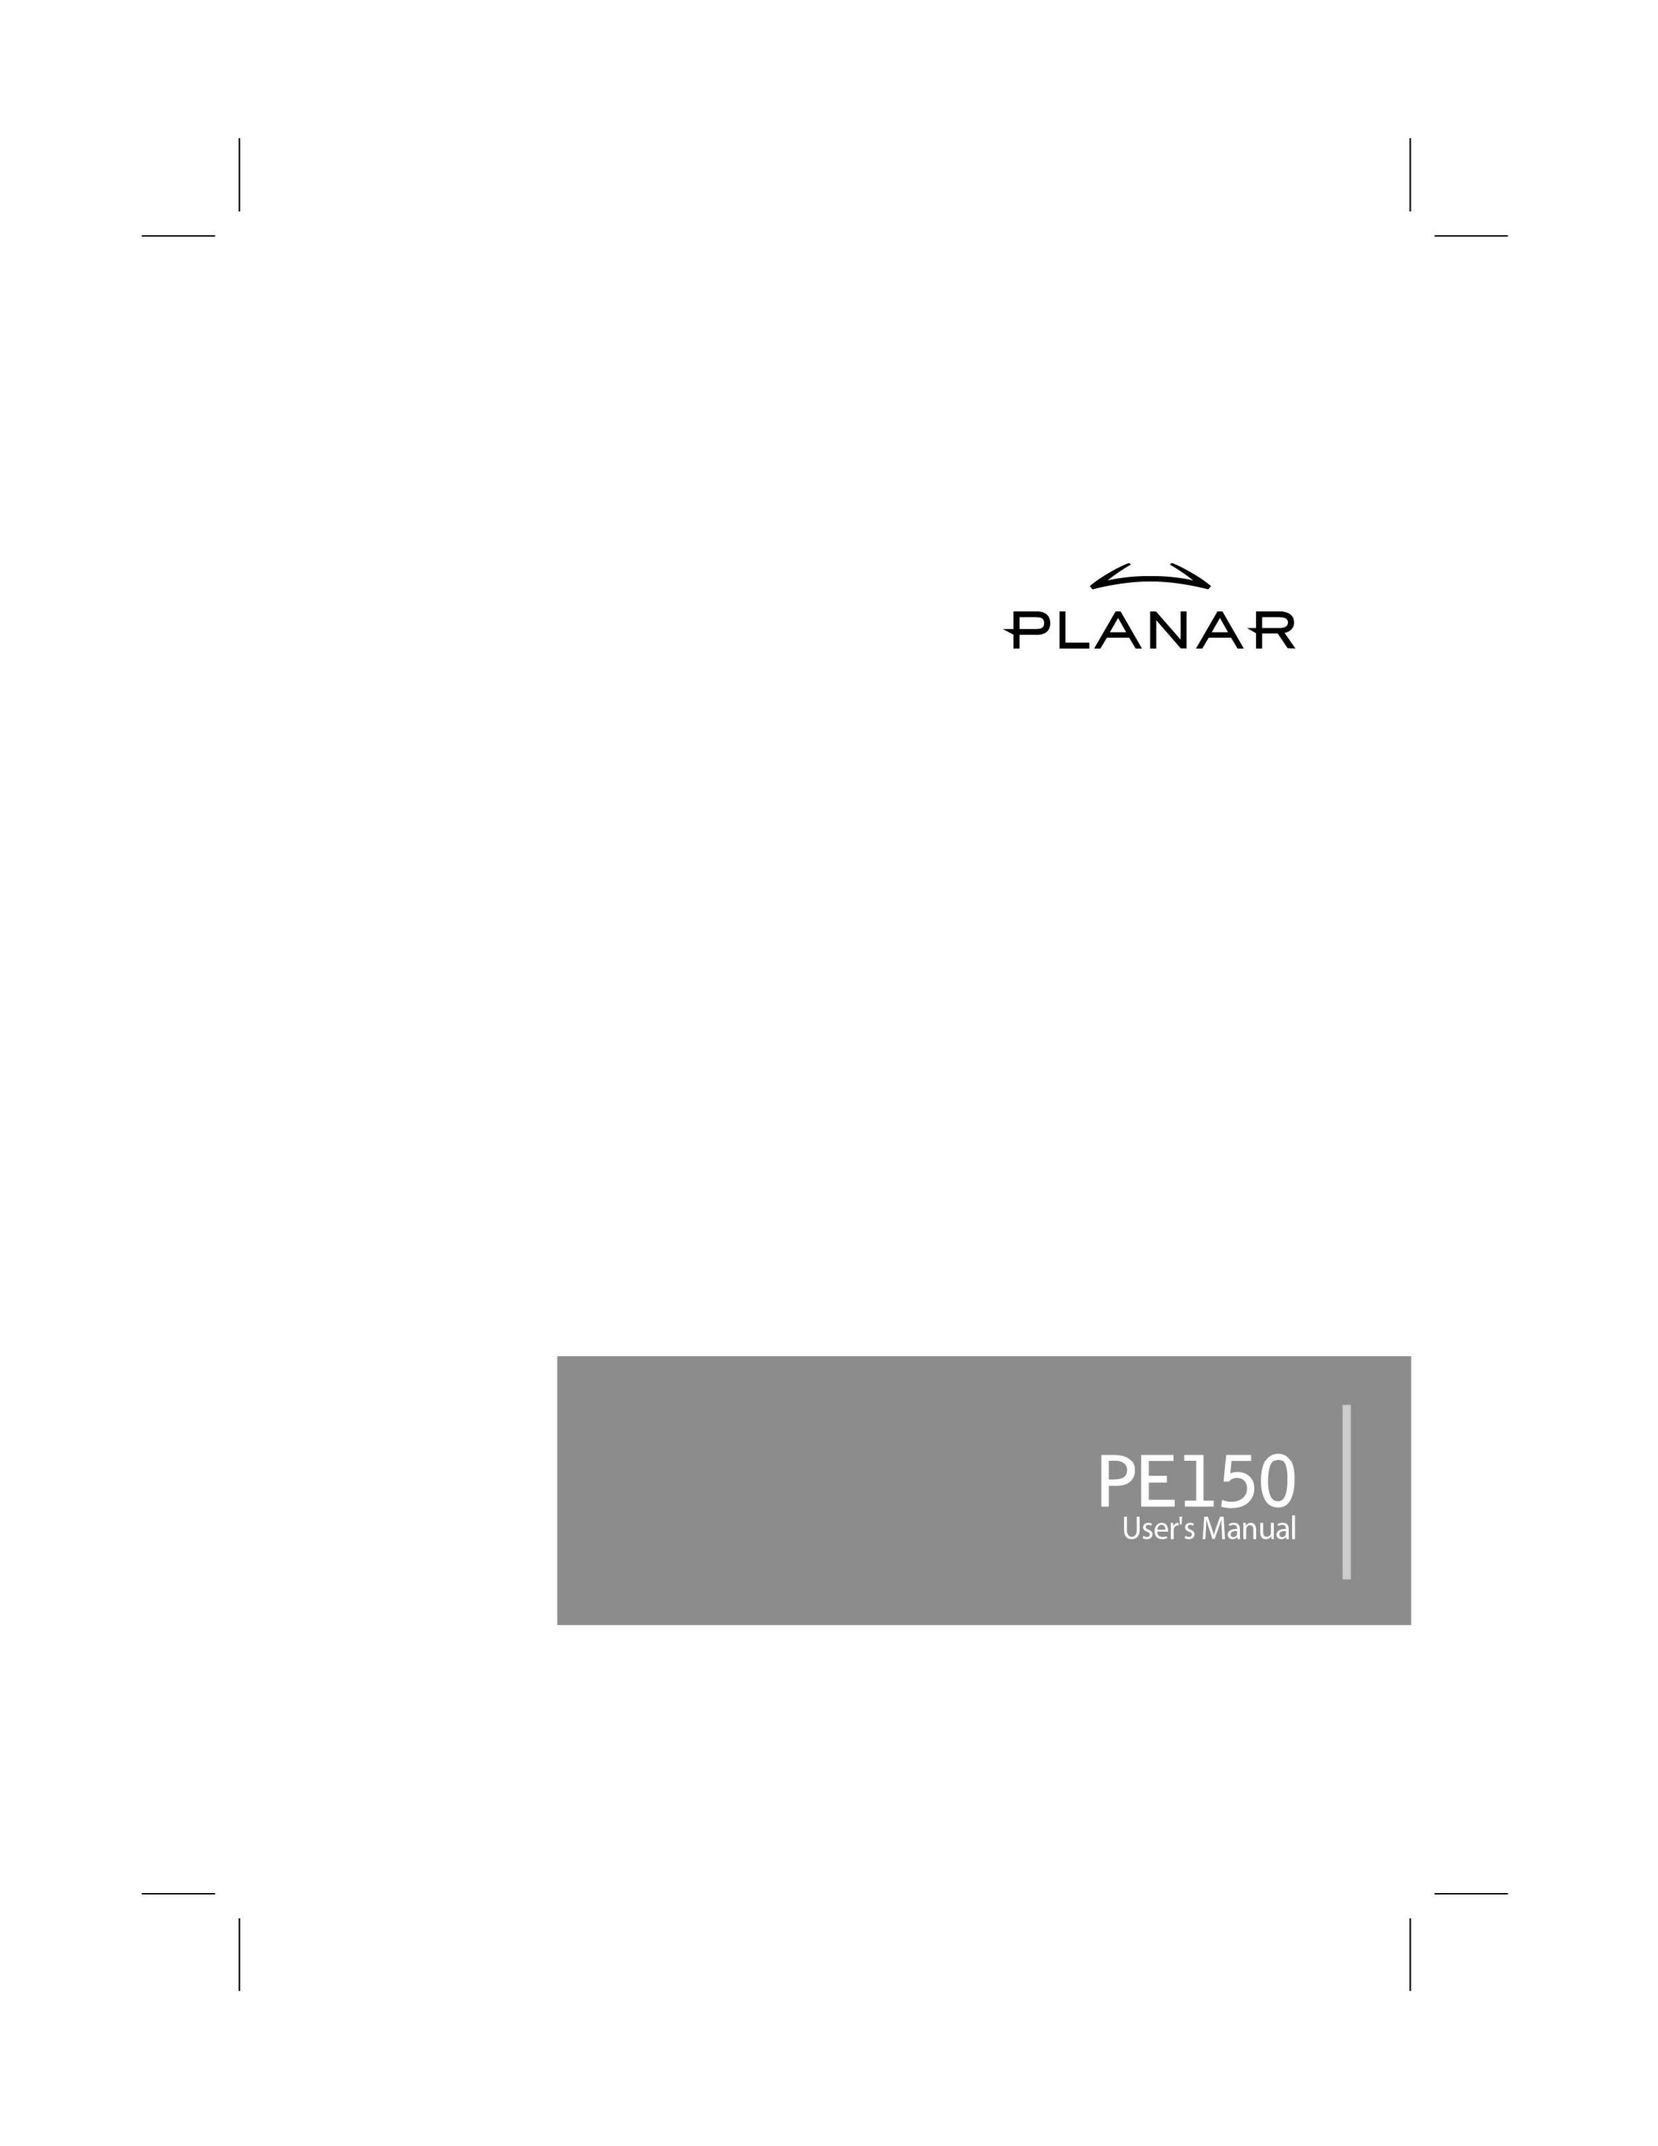 Planar PE150 Car Video System User Manual